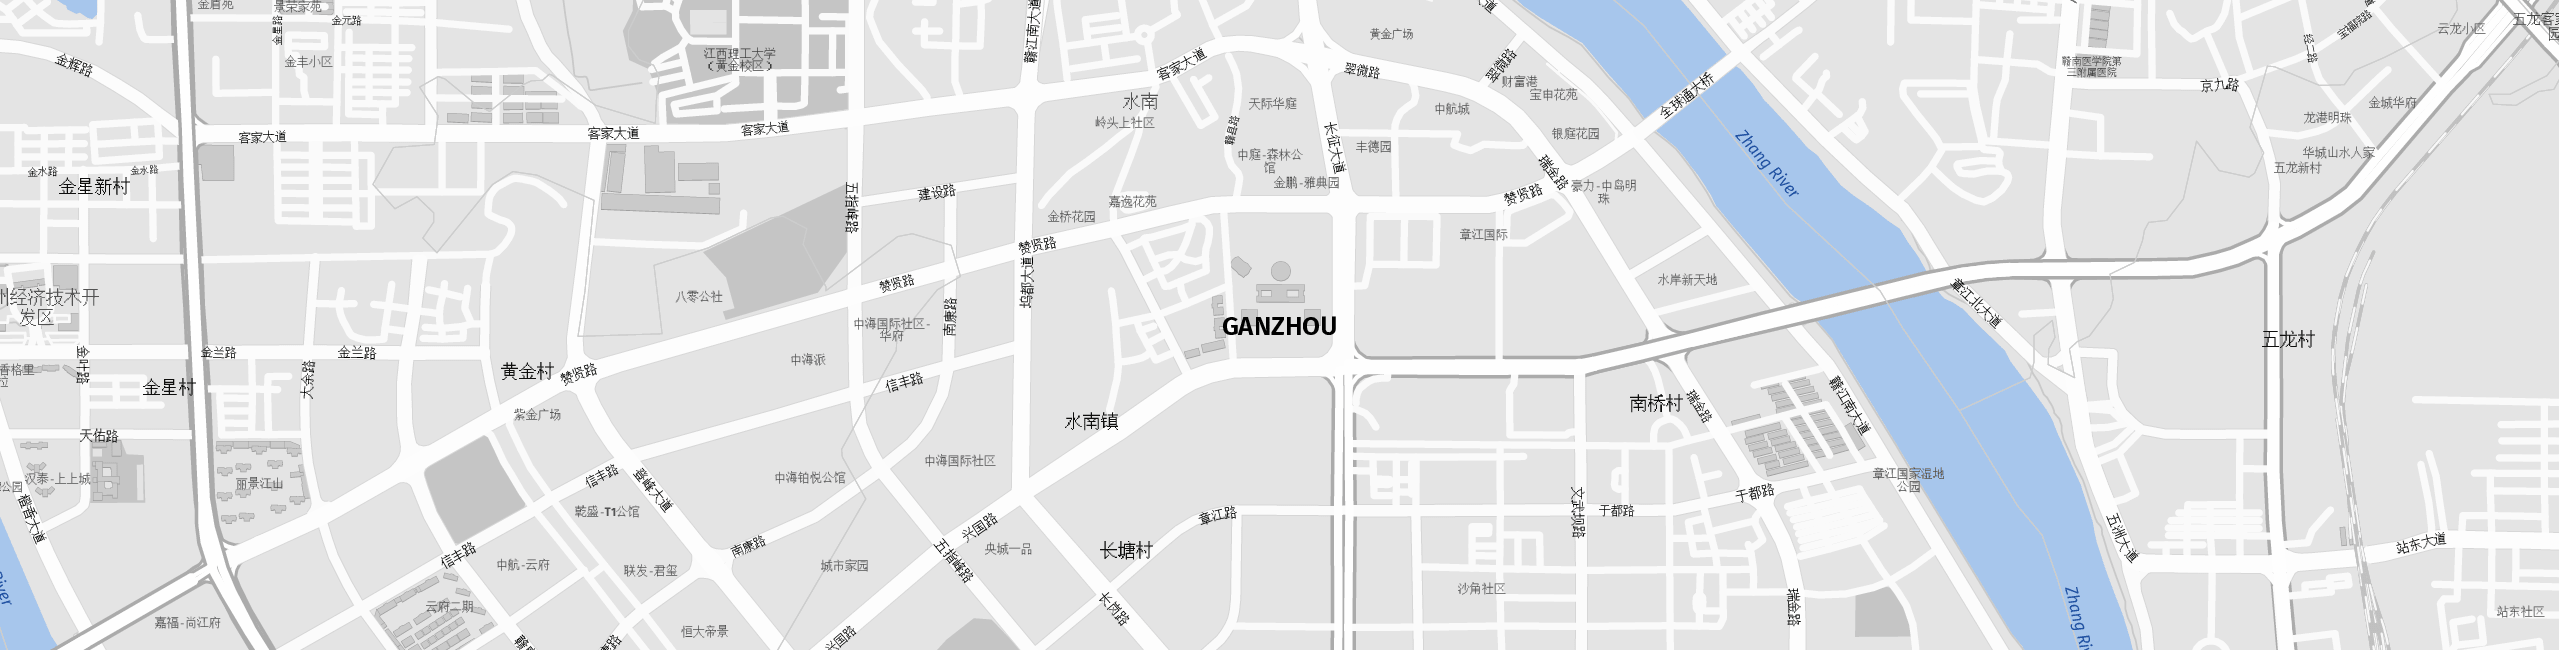 Stadtplan Ganzhou zum Downloaden.